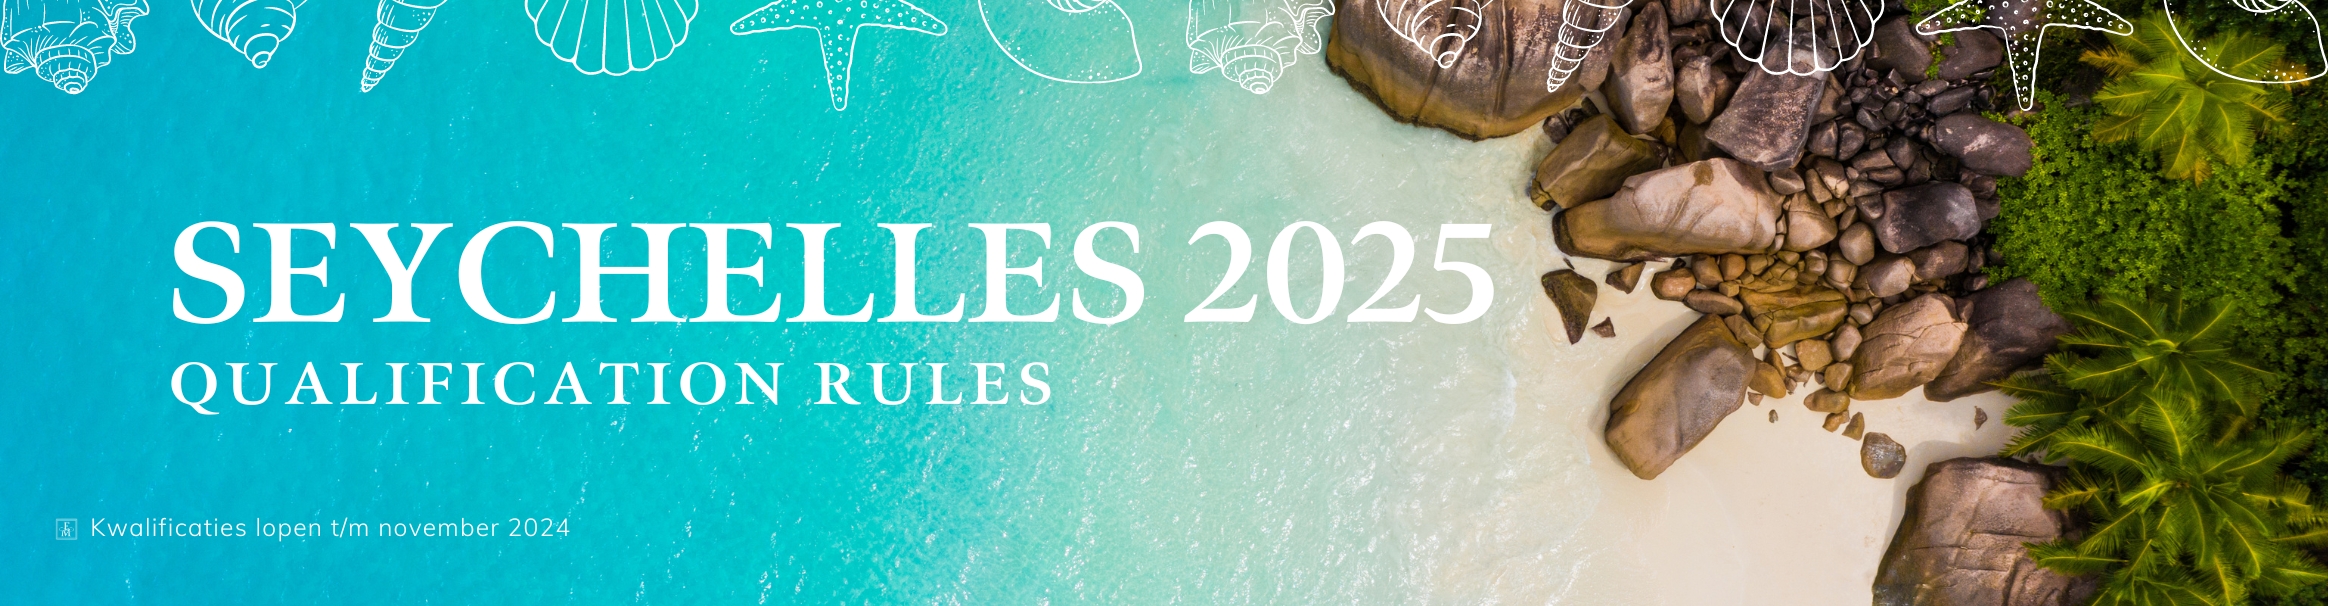 Seychelles 2025